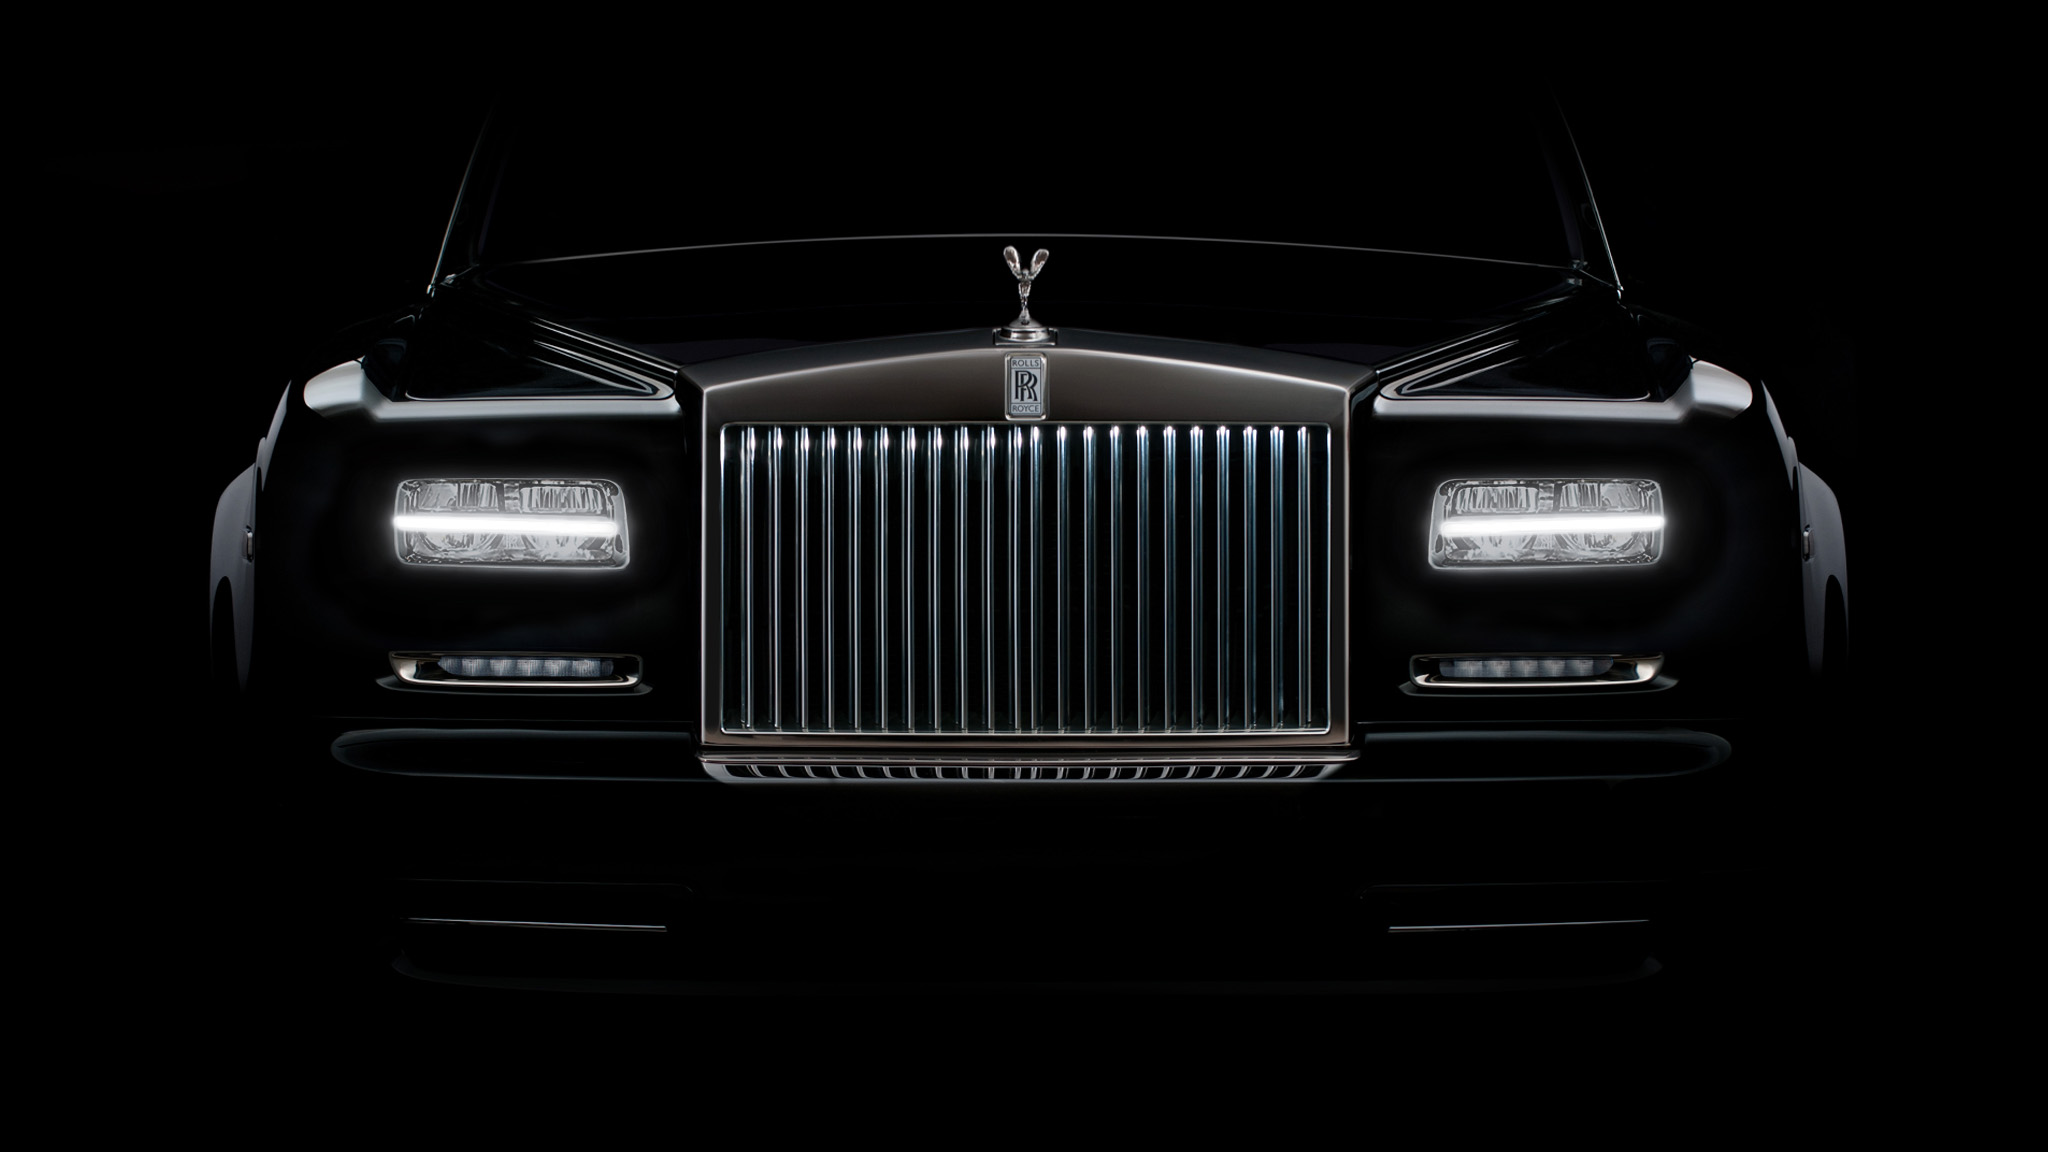 Amazing Rolls Royce Phatom Pictures & Backgrounds